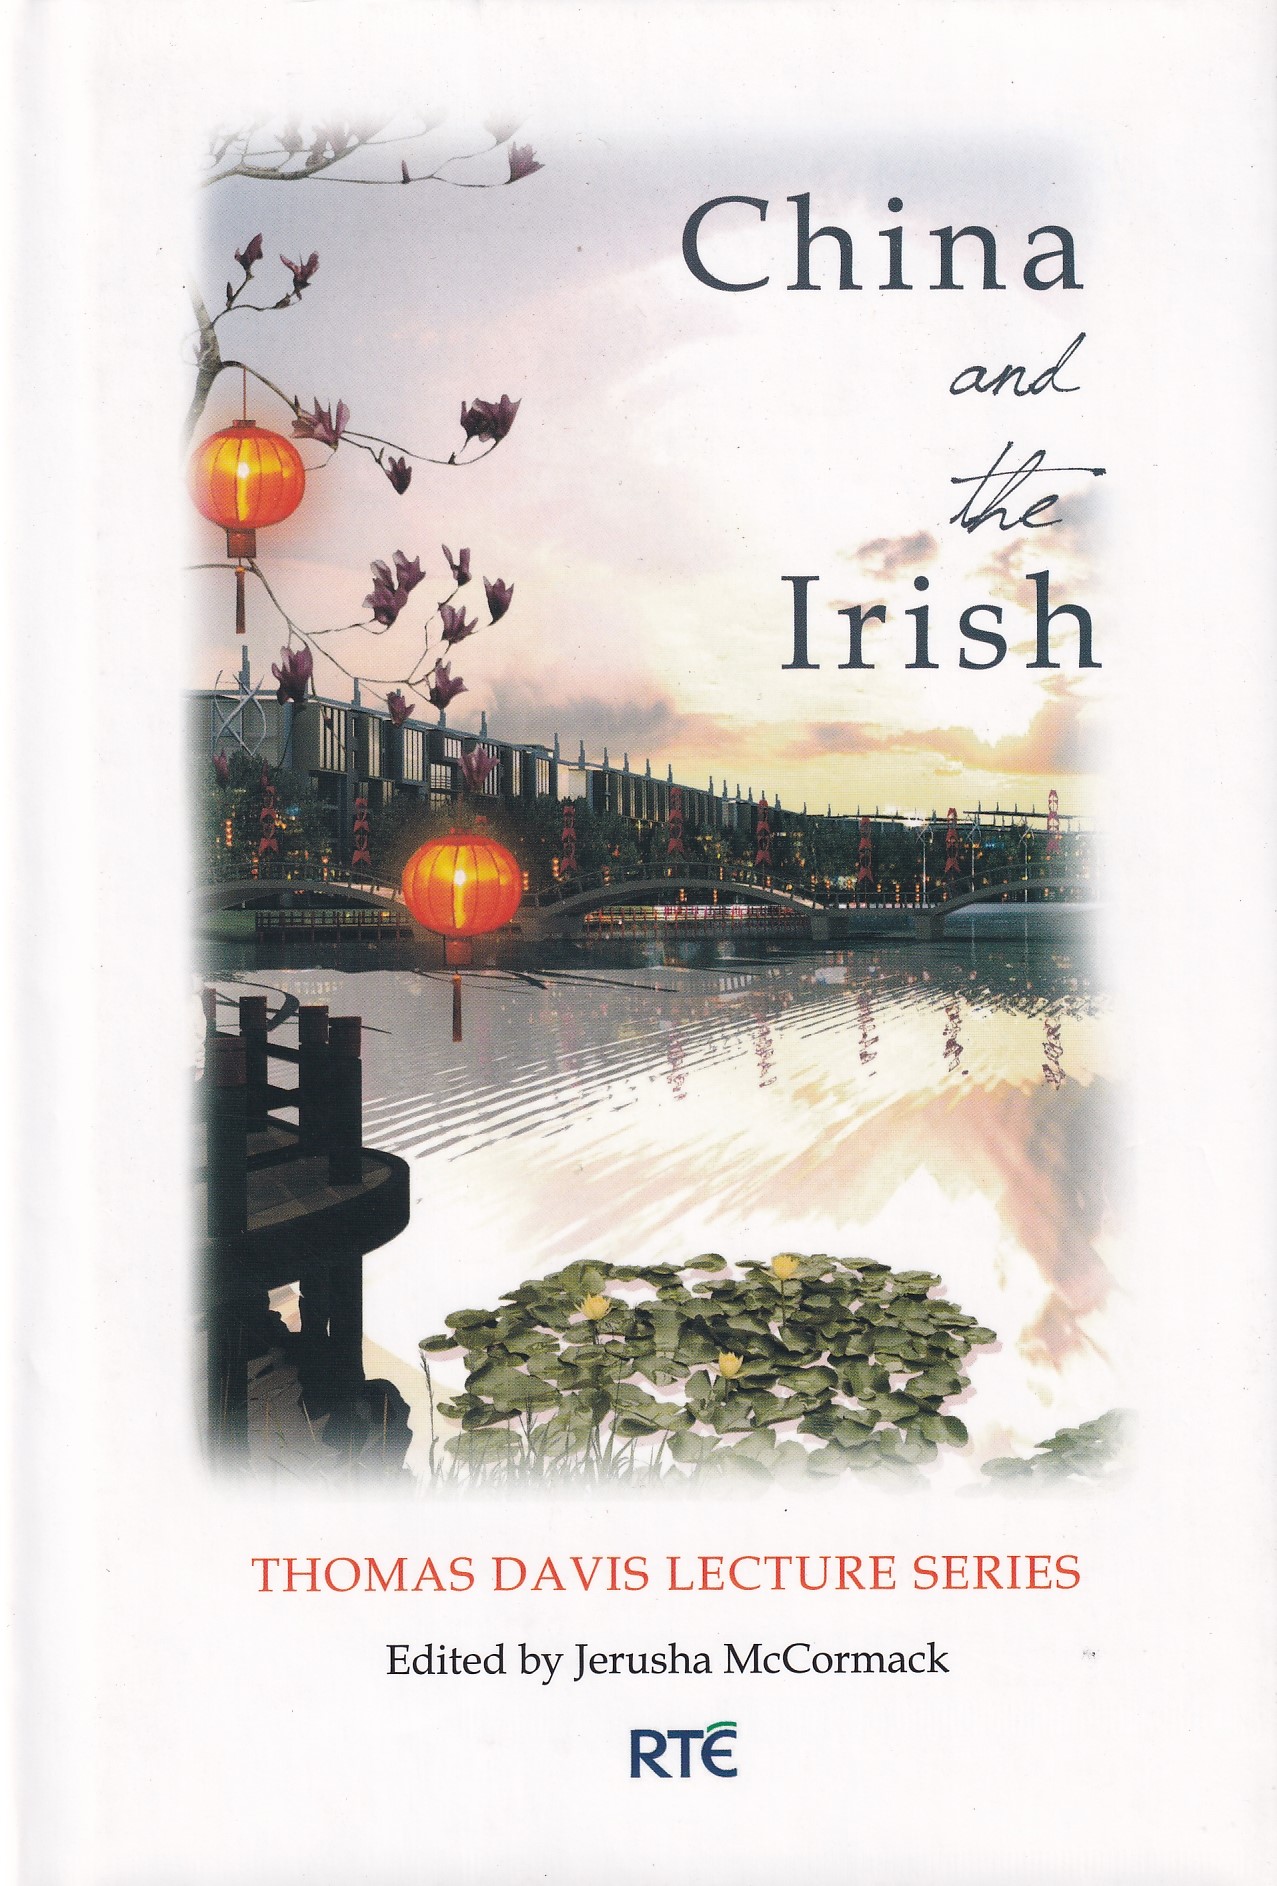 China and the Irish (Thomas Davis Lecture) by Jerusha McCormack (ed.)